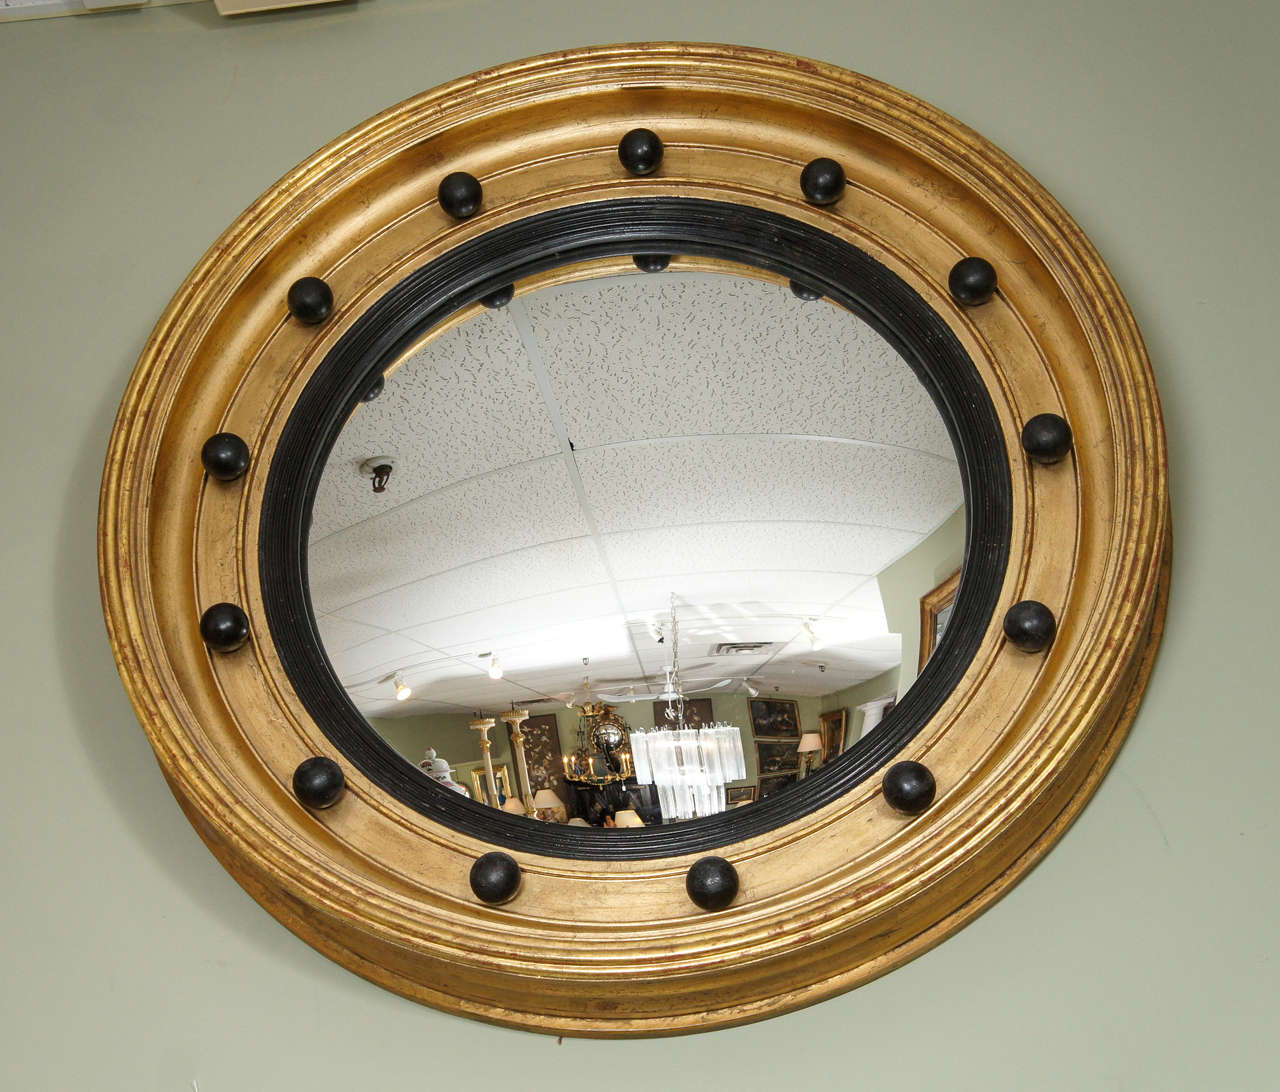 Giltwood convex mirror with ebonized details.